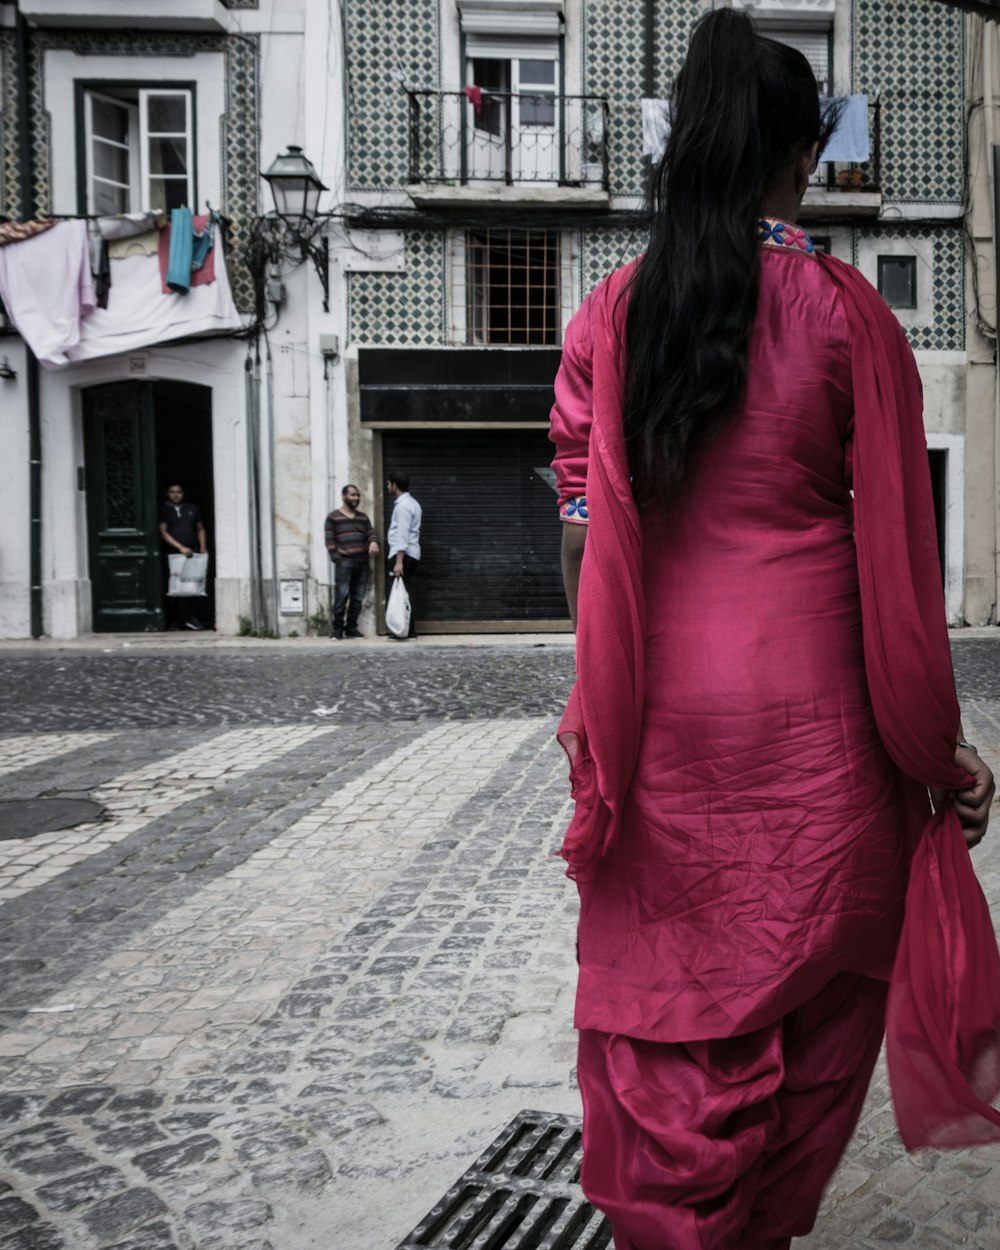 a woman in a pink dress walking down a street